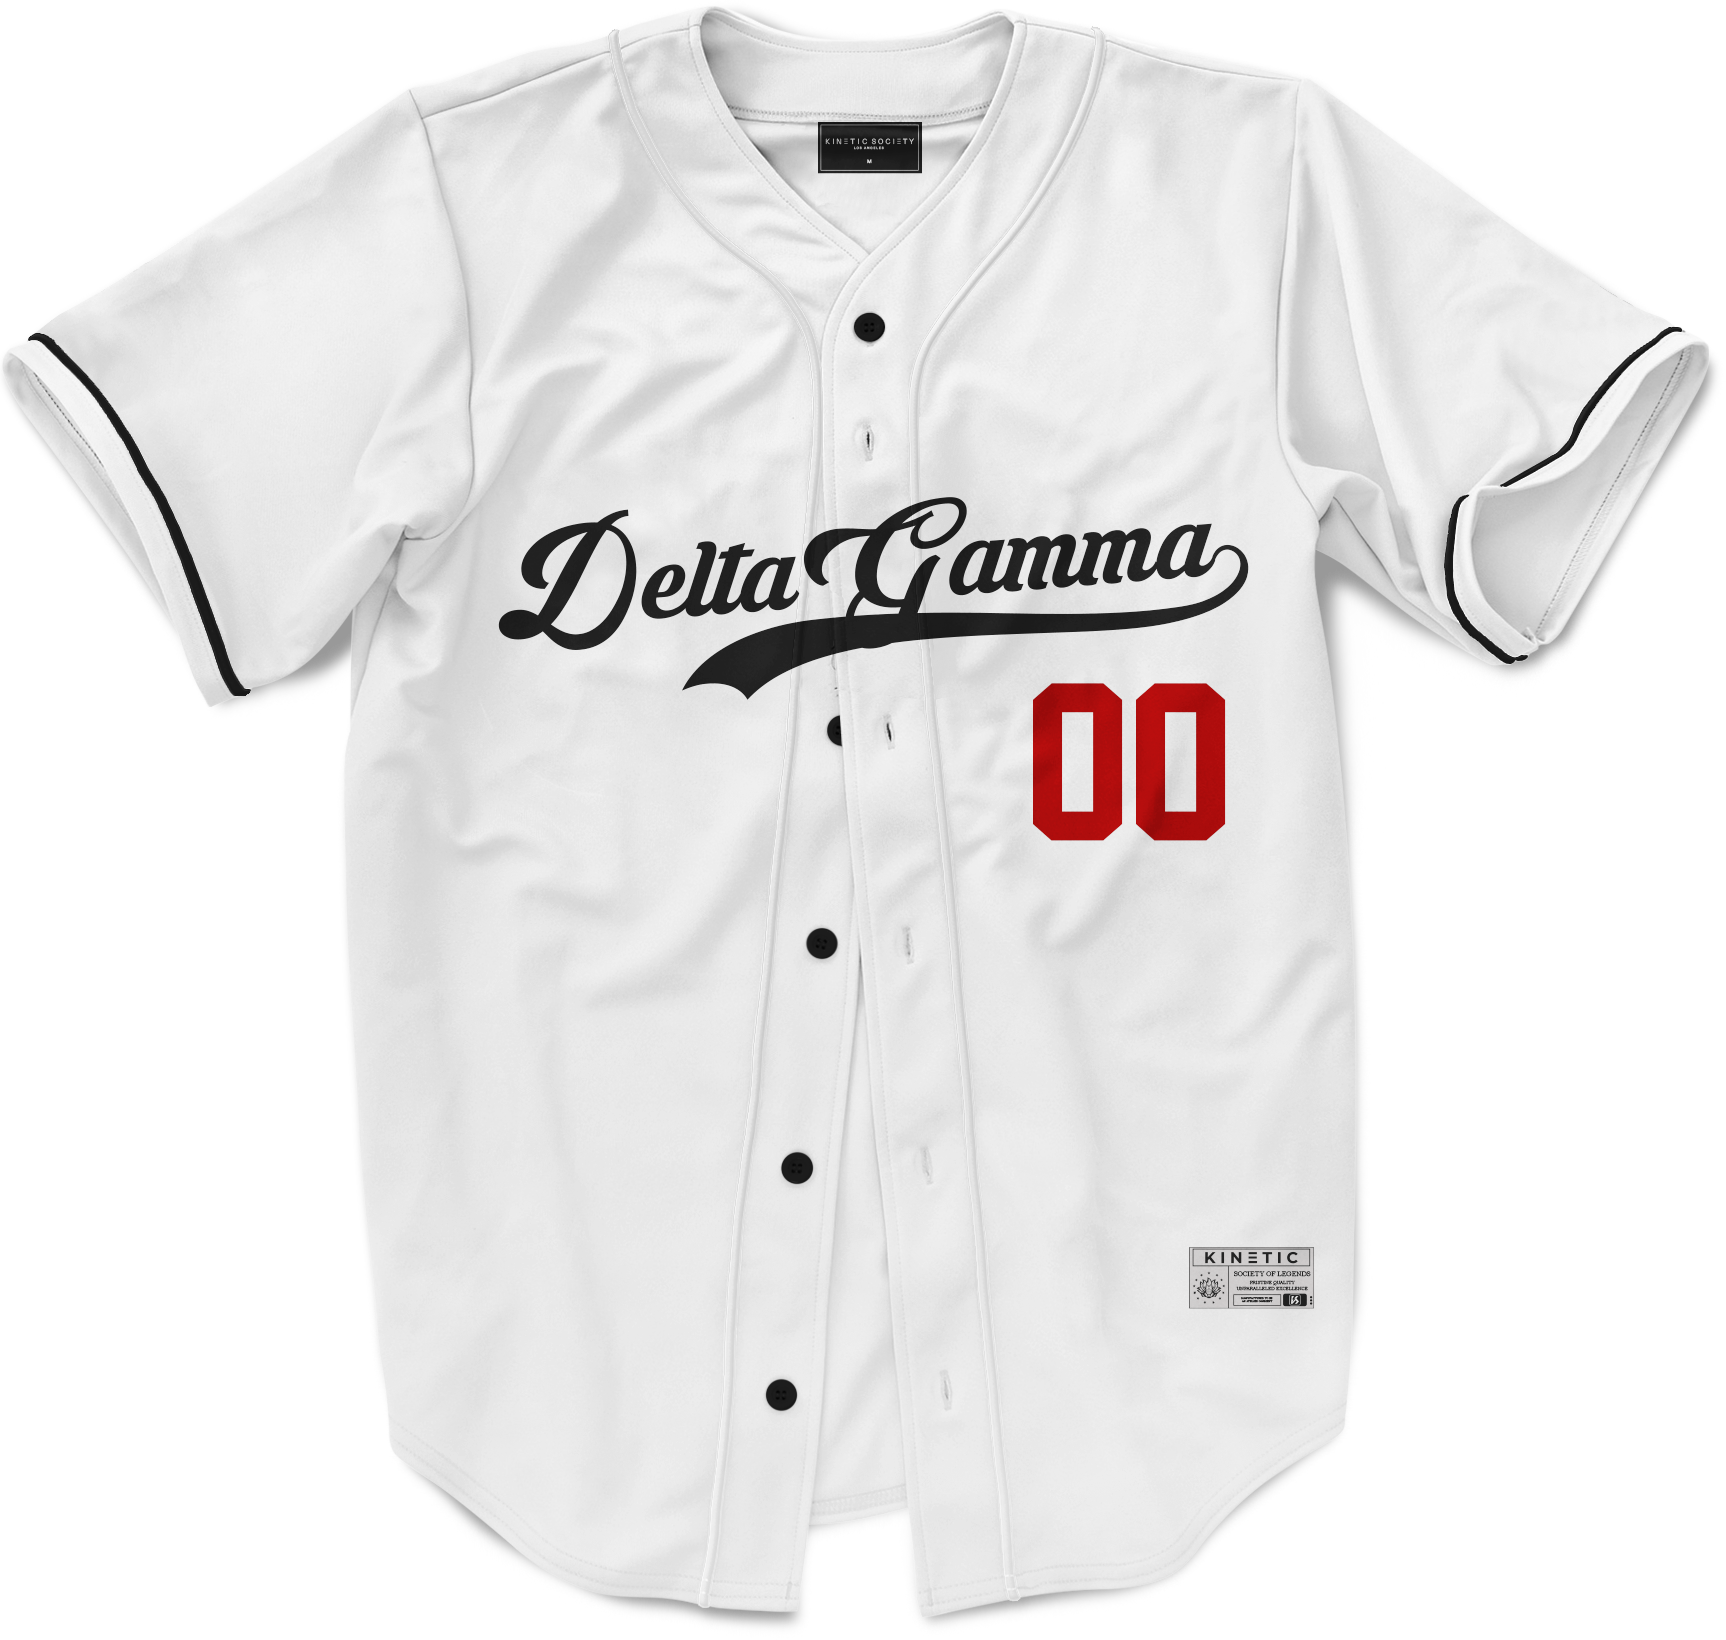 Delta Gamma - Classic Ballpark Red Baseball Jersey